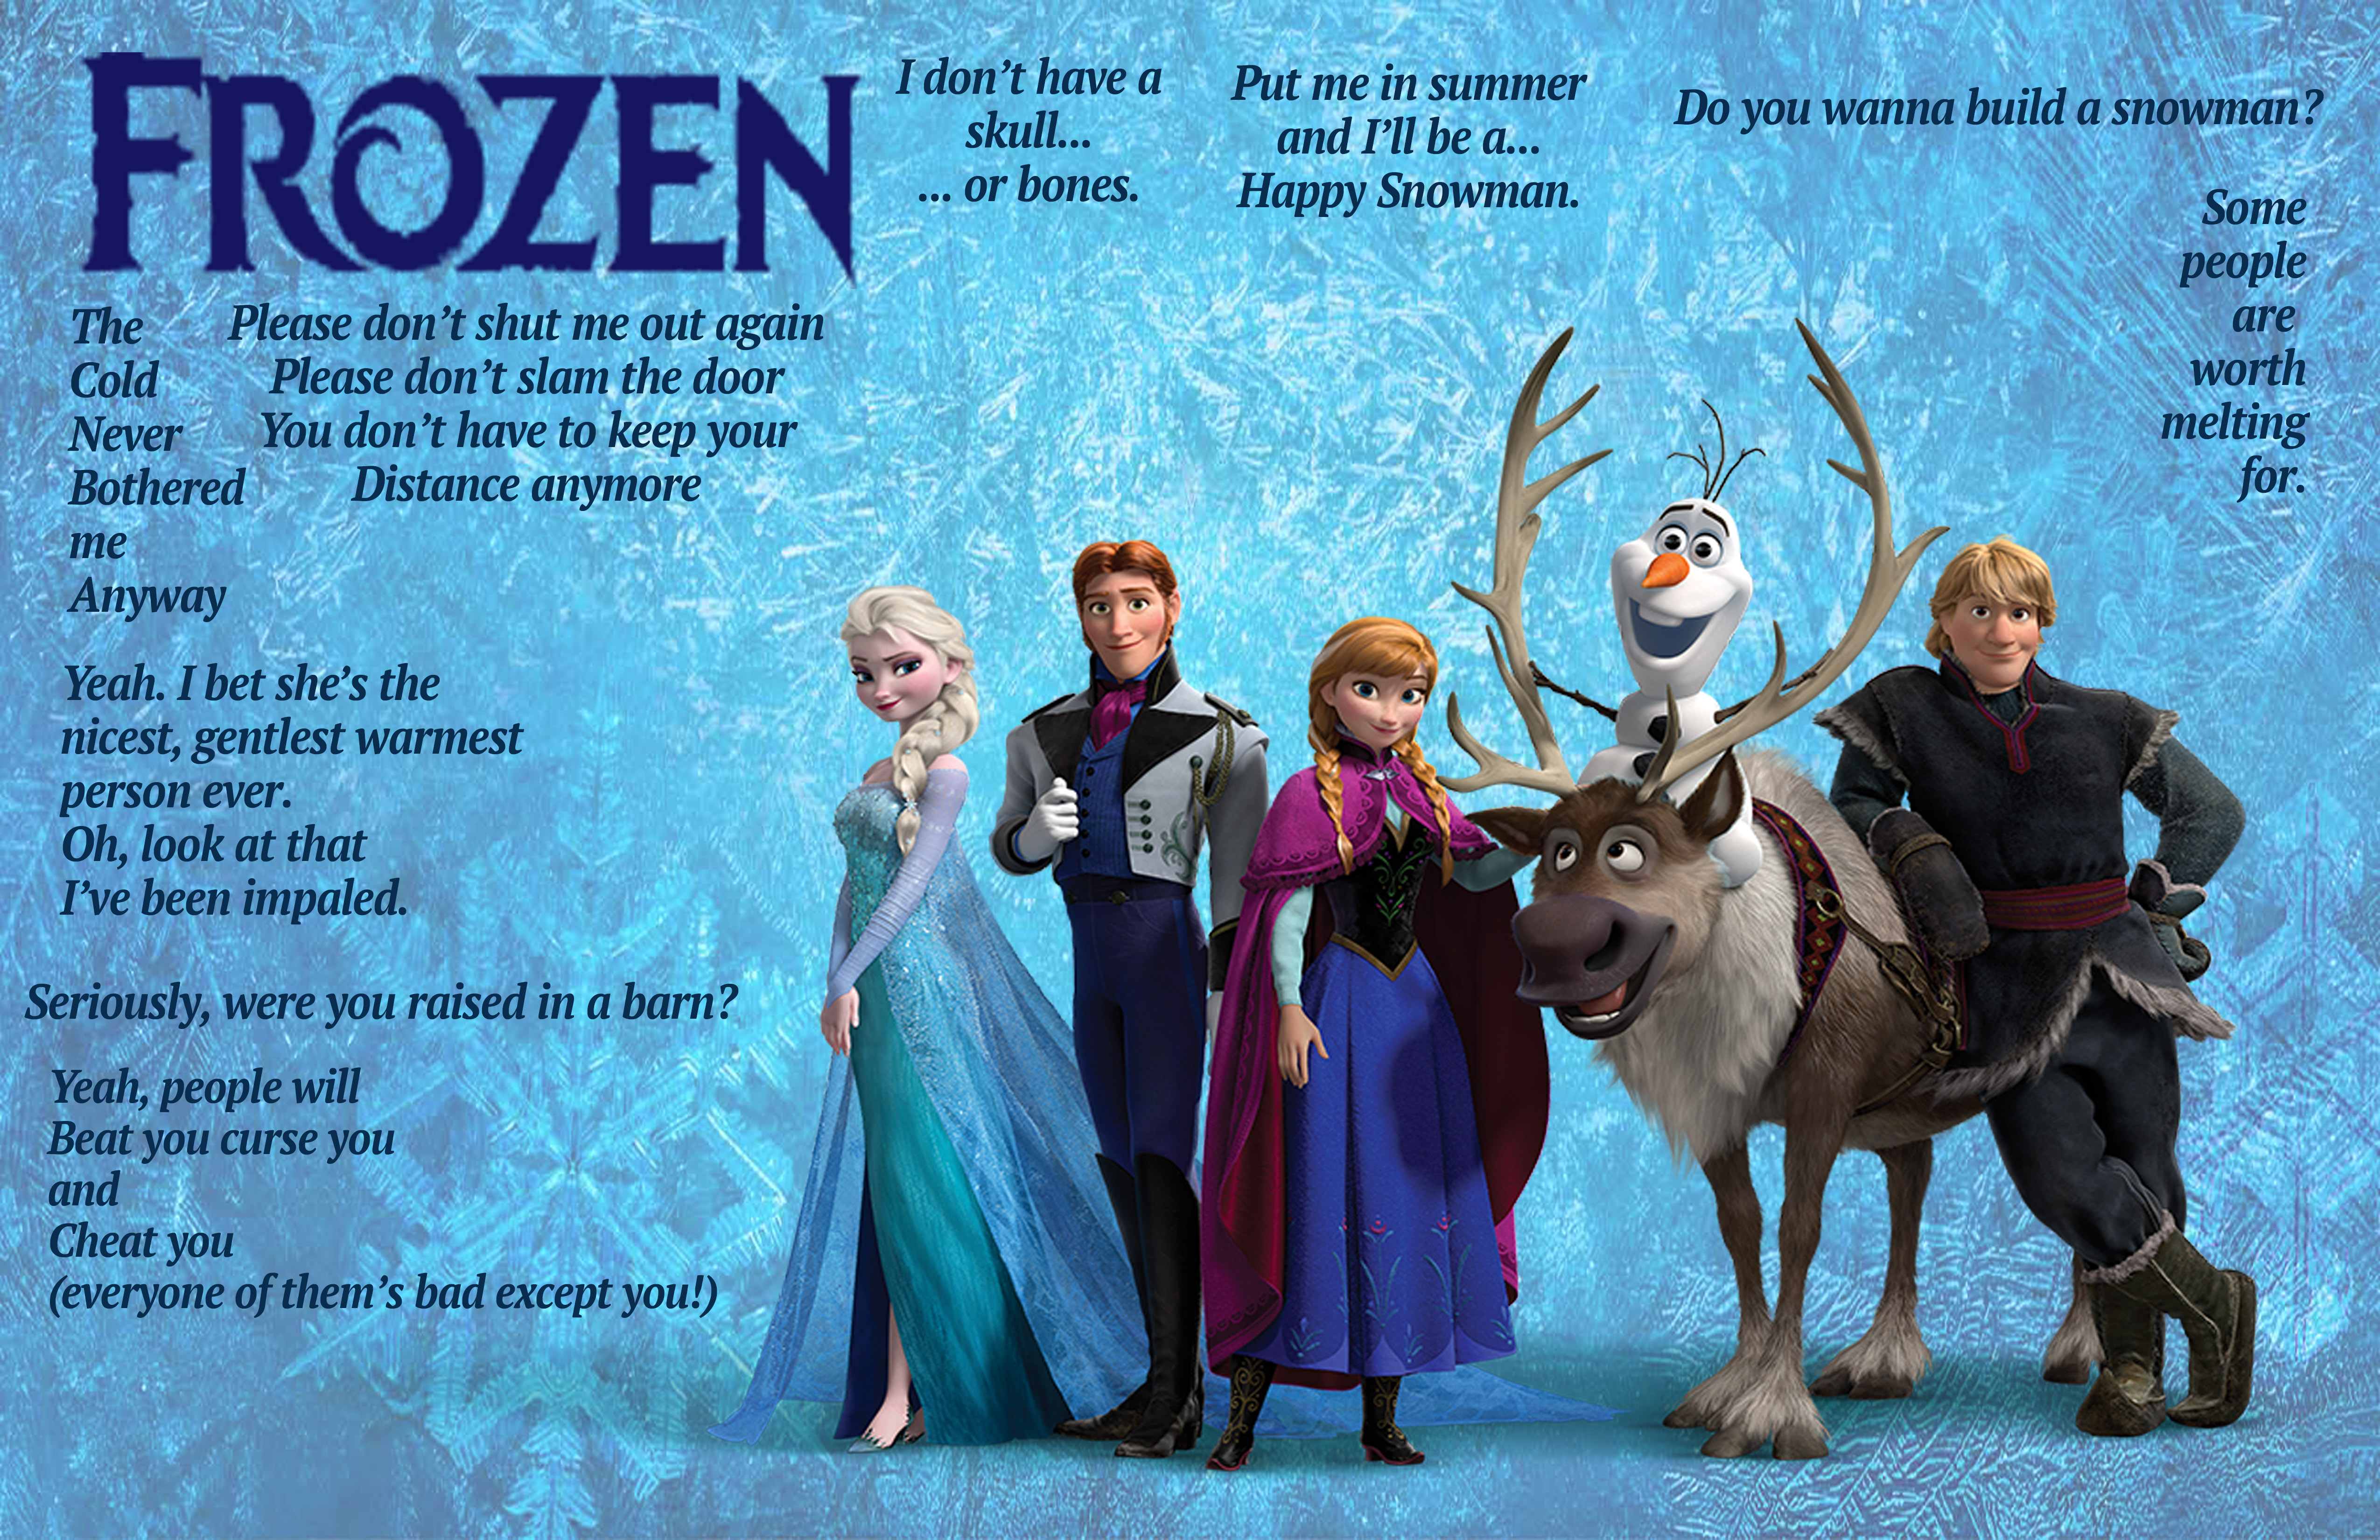 It is a Frozen poster. 